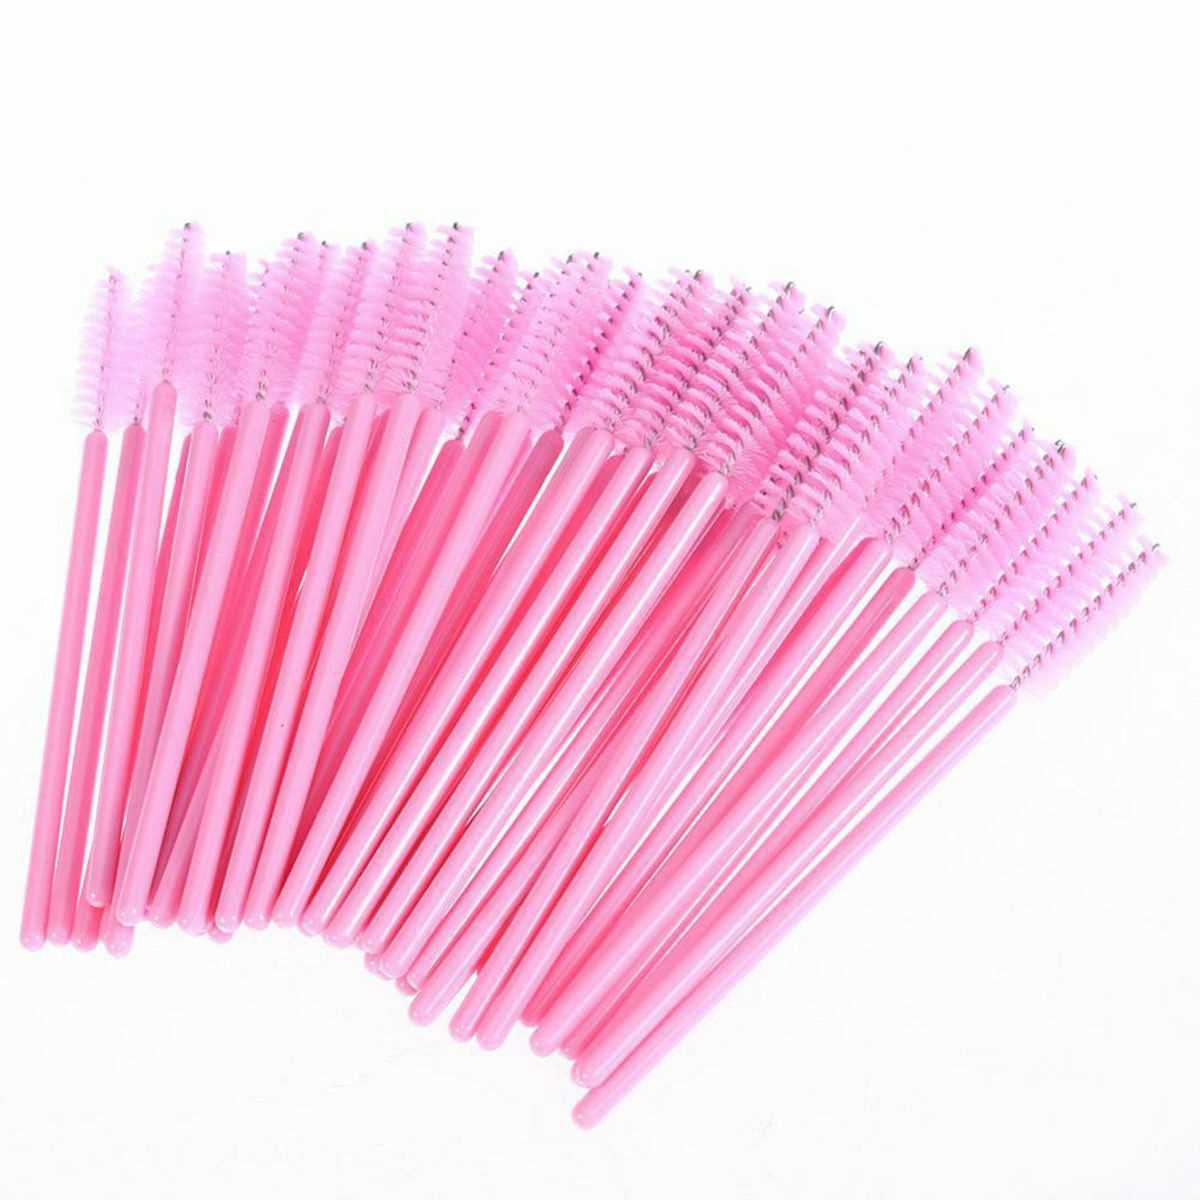 100PCS Pink Disposable Mascara Wands Eyelash Brushes Brow Lash Extension Spoolie Applicator